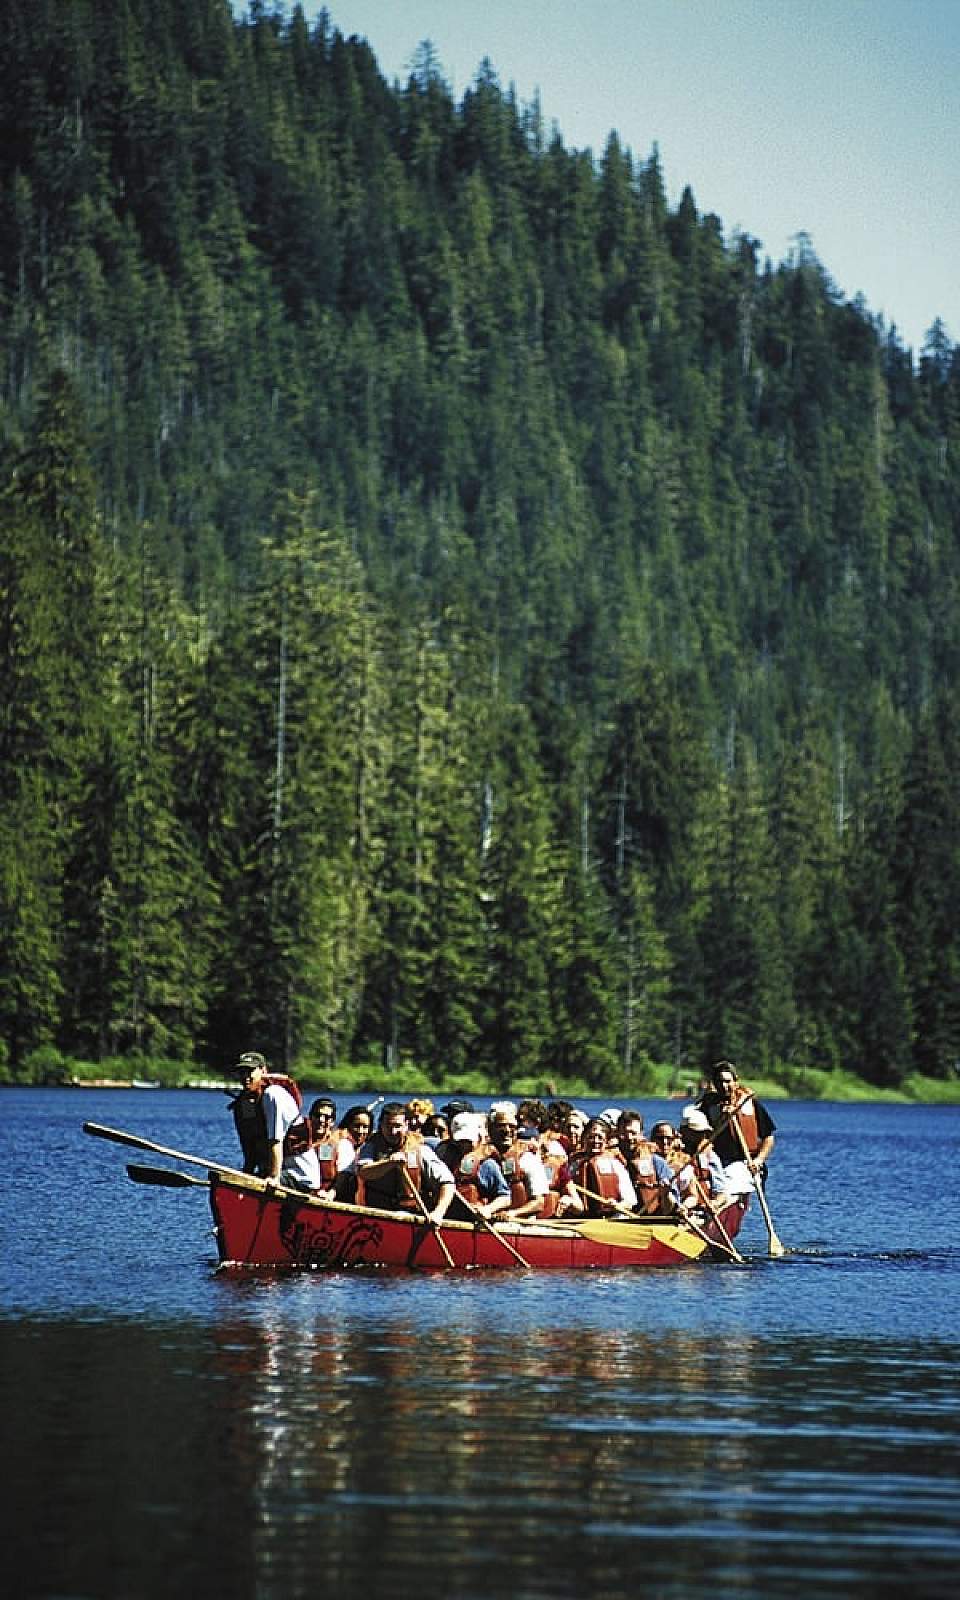 Paddle across a serene alpine lake in a traditional Alaska Native-style canoe